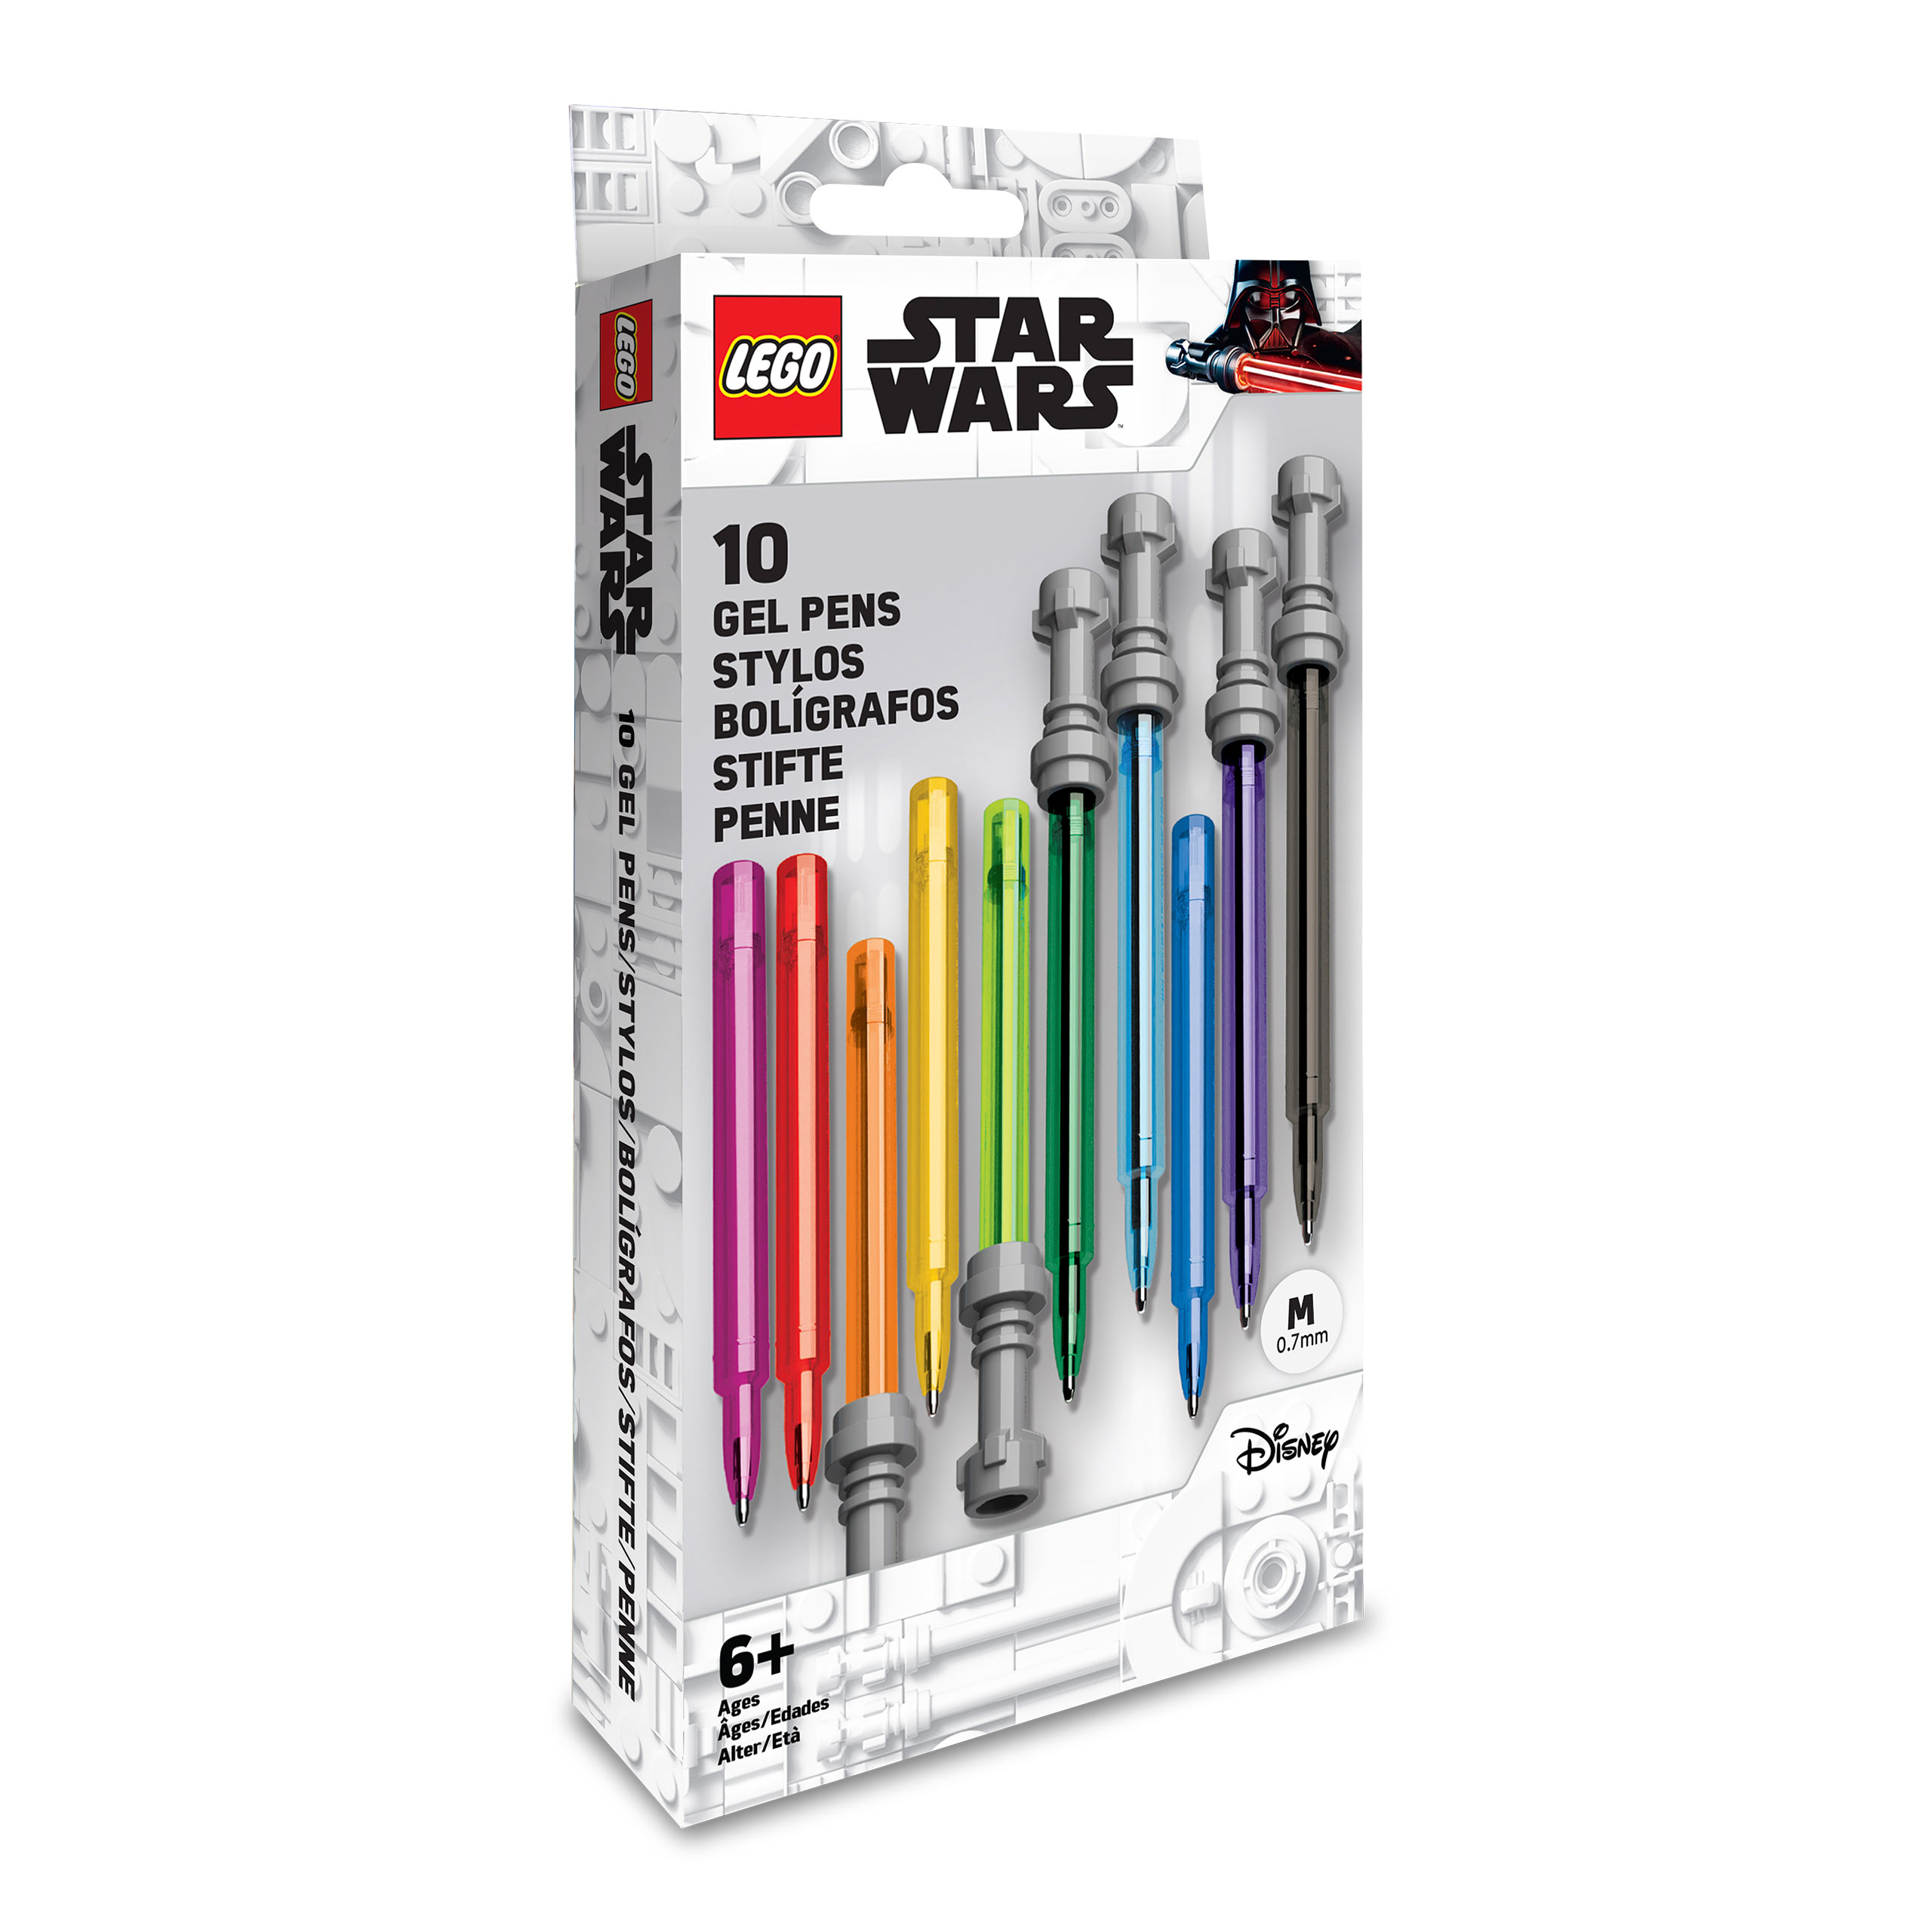 Lightsaber LEGO pen - Star Wars